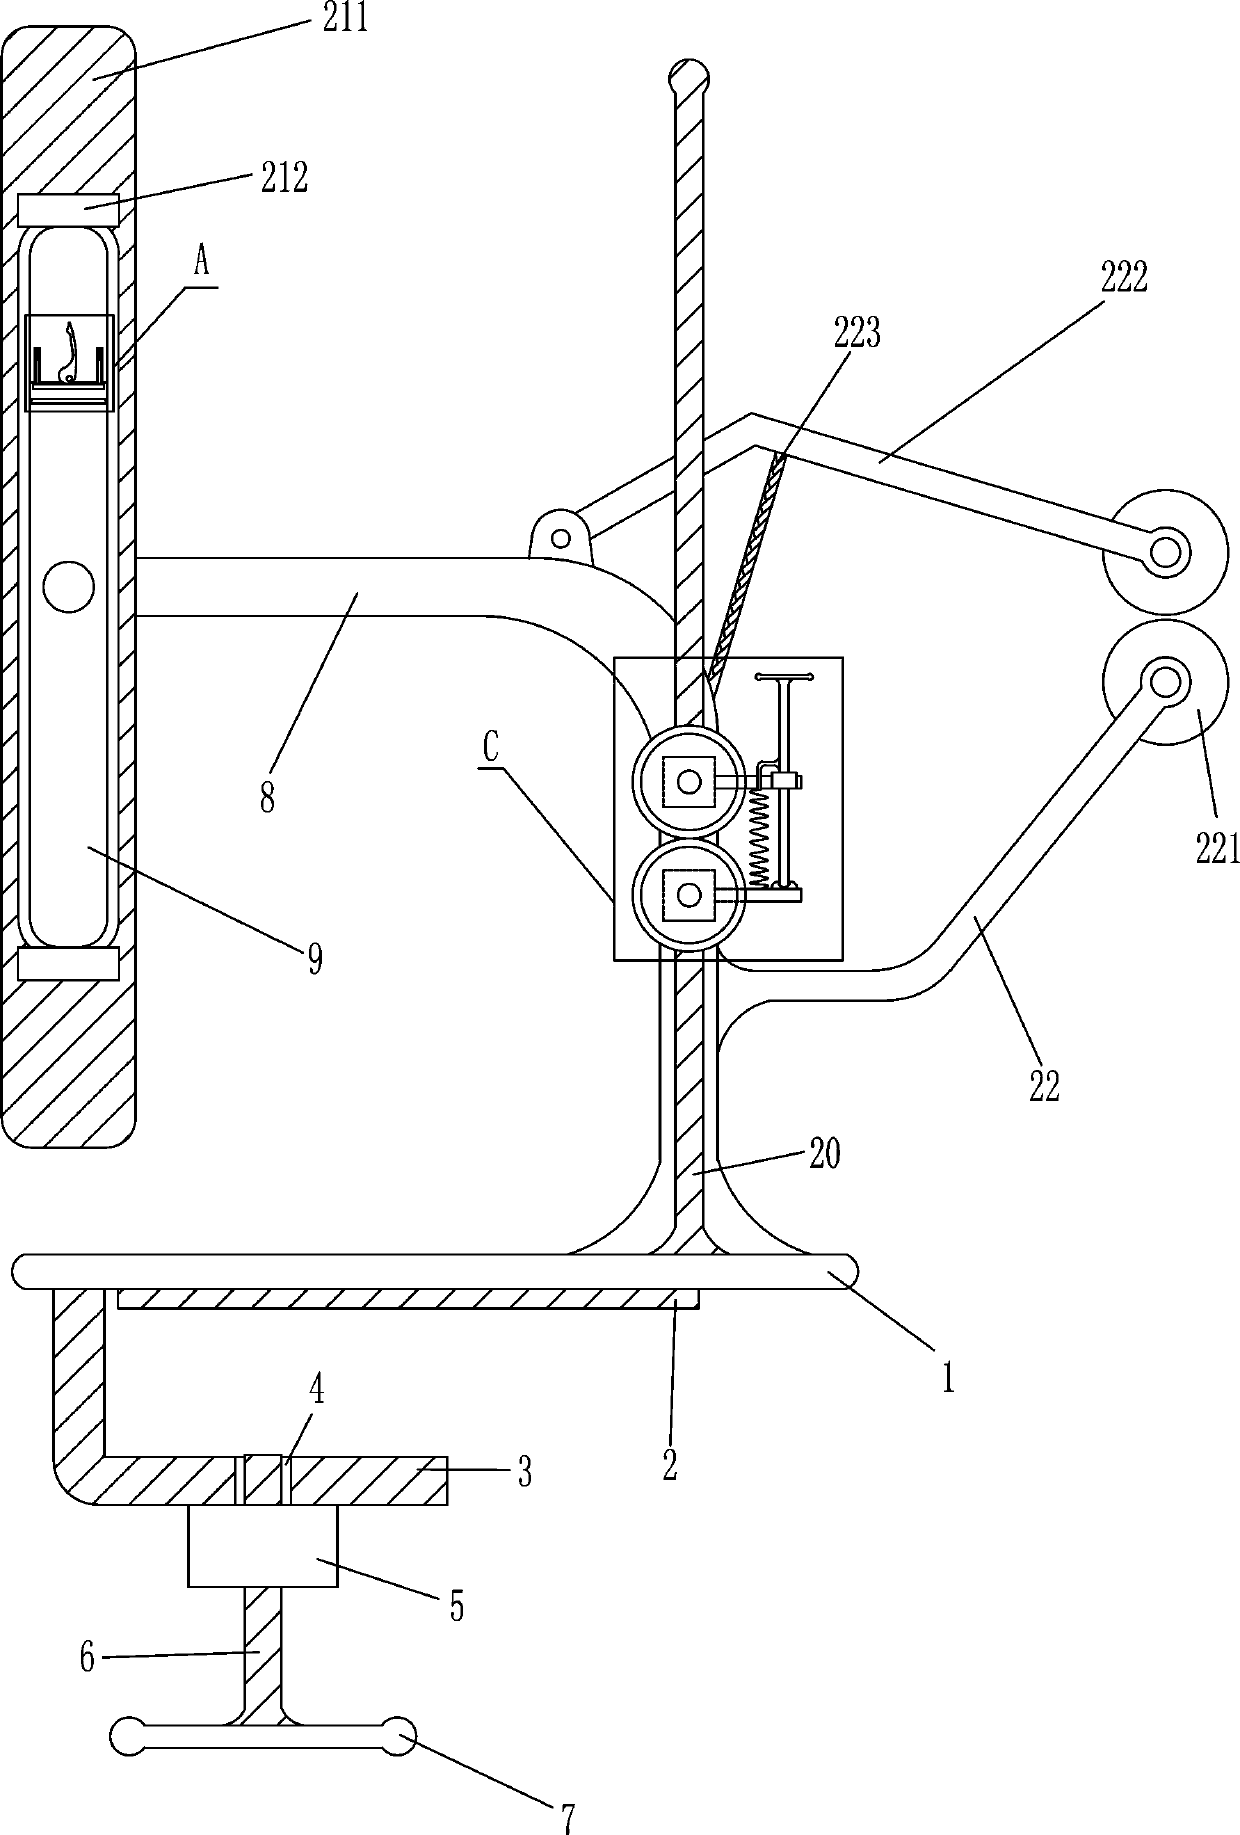 Manual workshop cloth winding machine